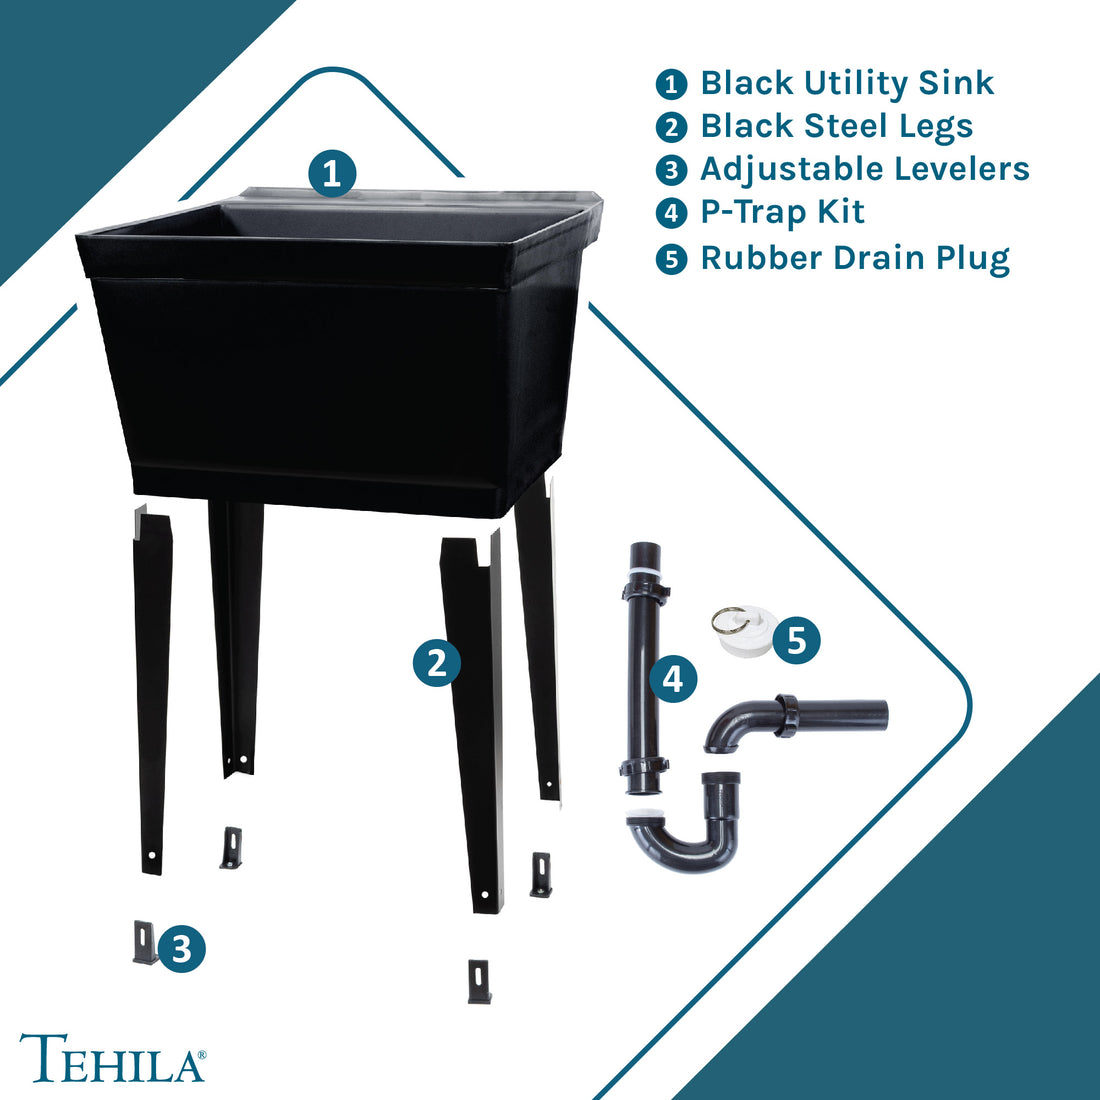 Black Standard Utility Sink Contents Black Utility Sink | Black Steel Legs | Adjustable Levelers | P-Trap Kit | Rubber Drain Plug